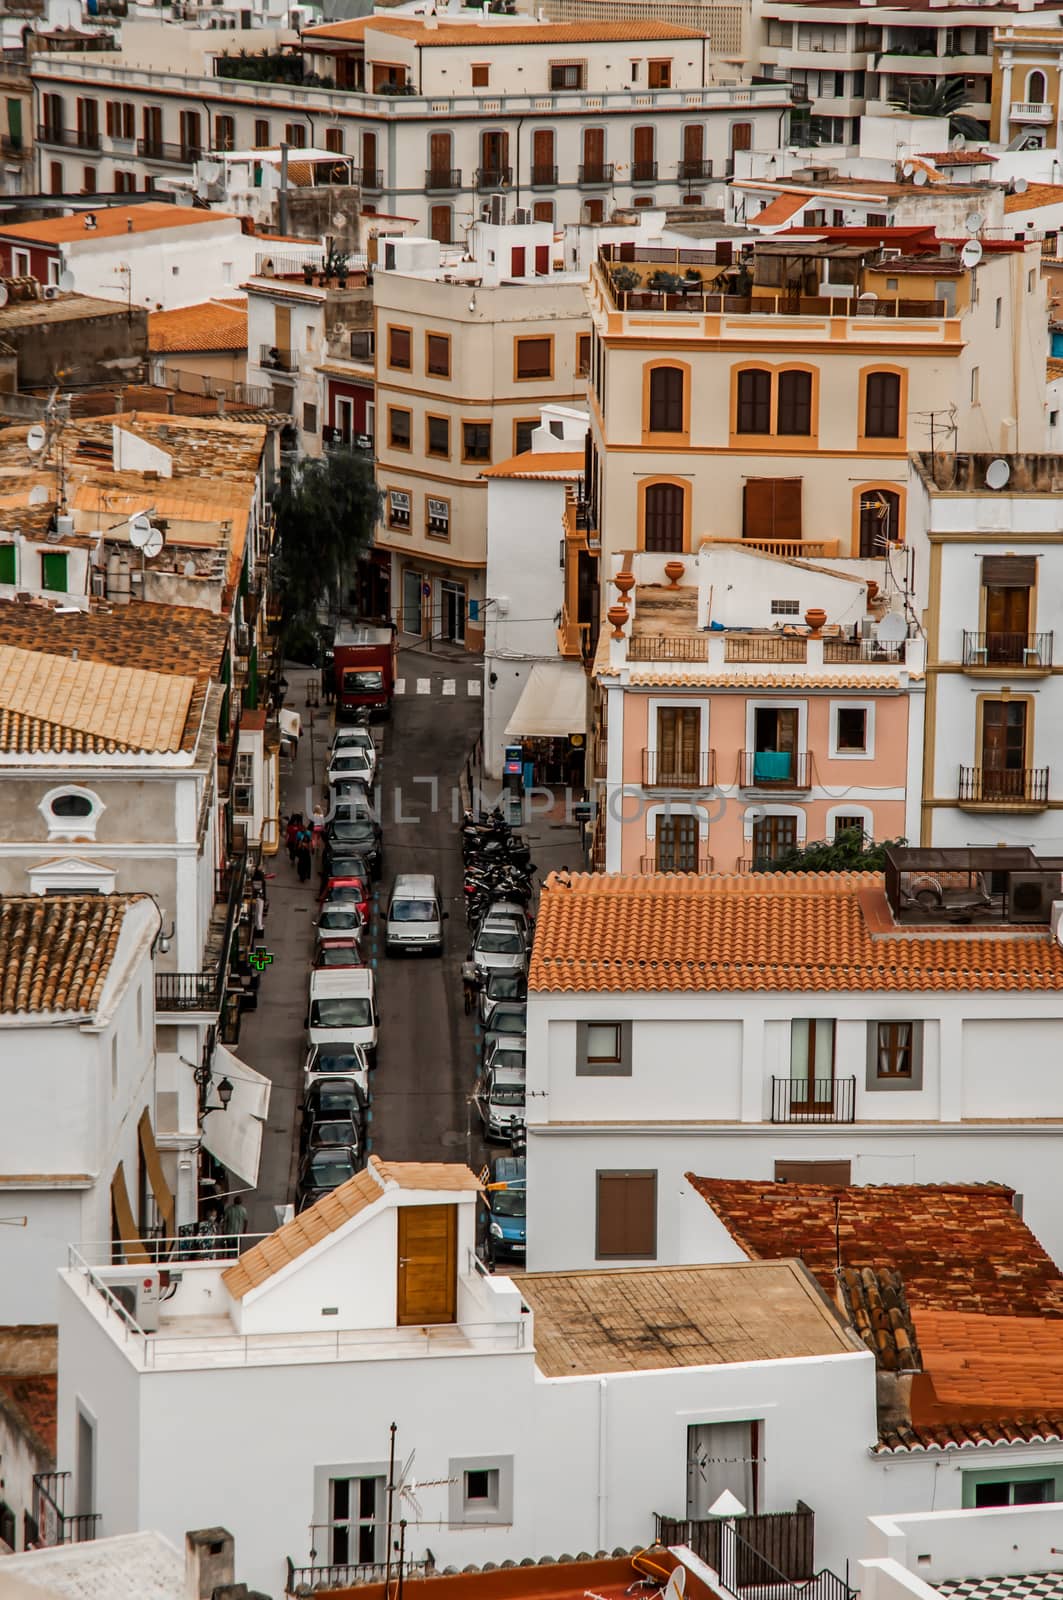 Streets of Ibiza by JFJacobsz